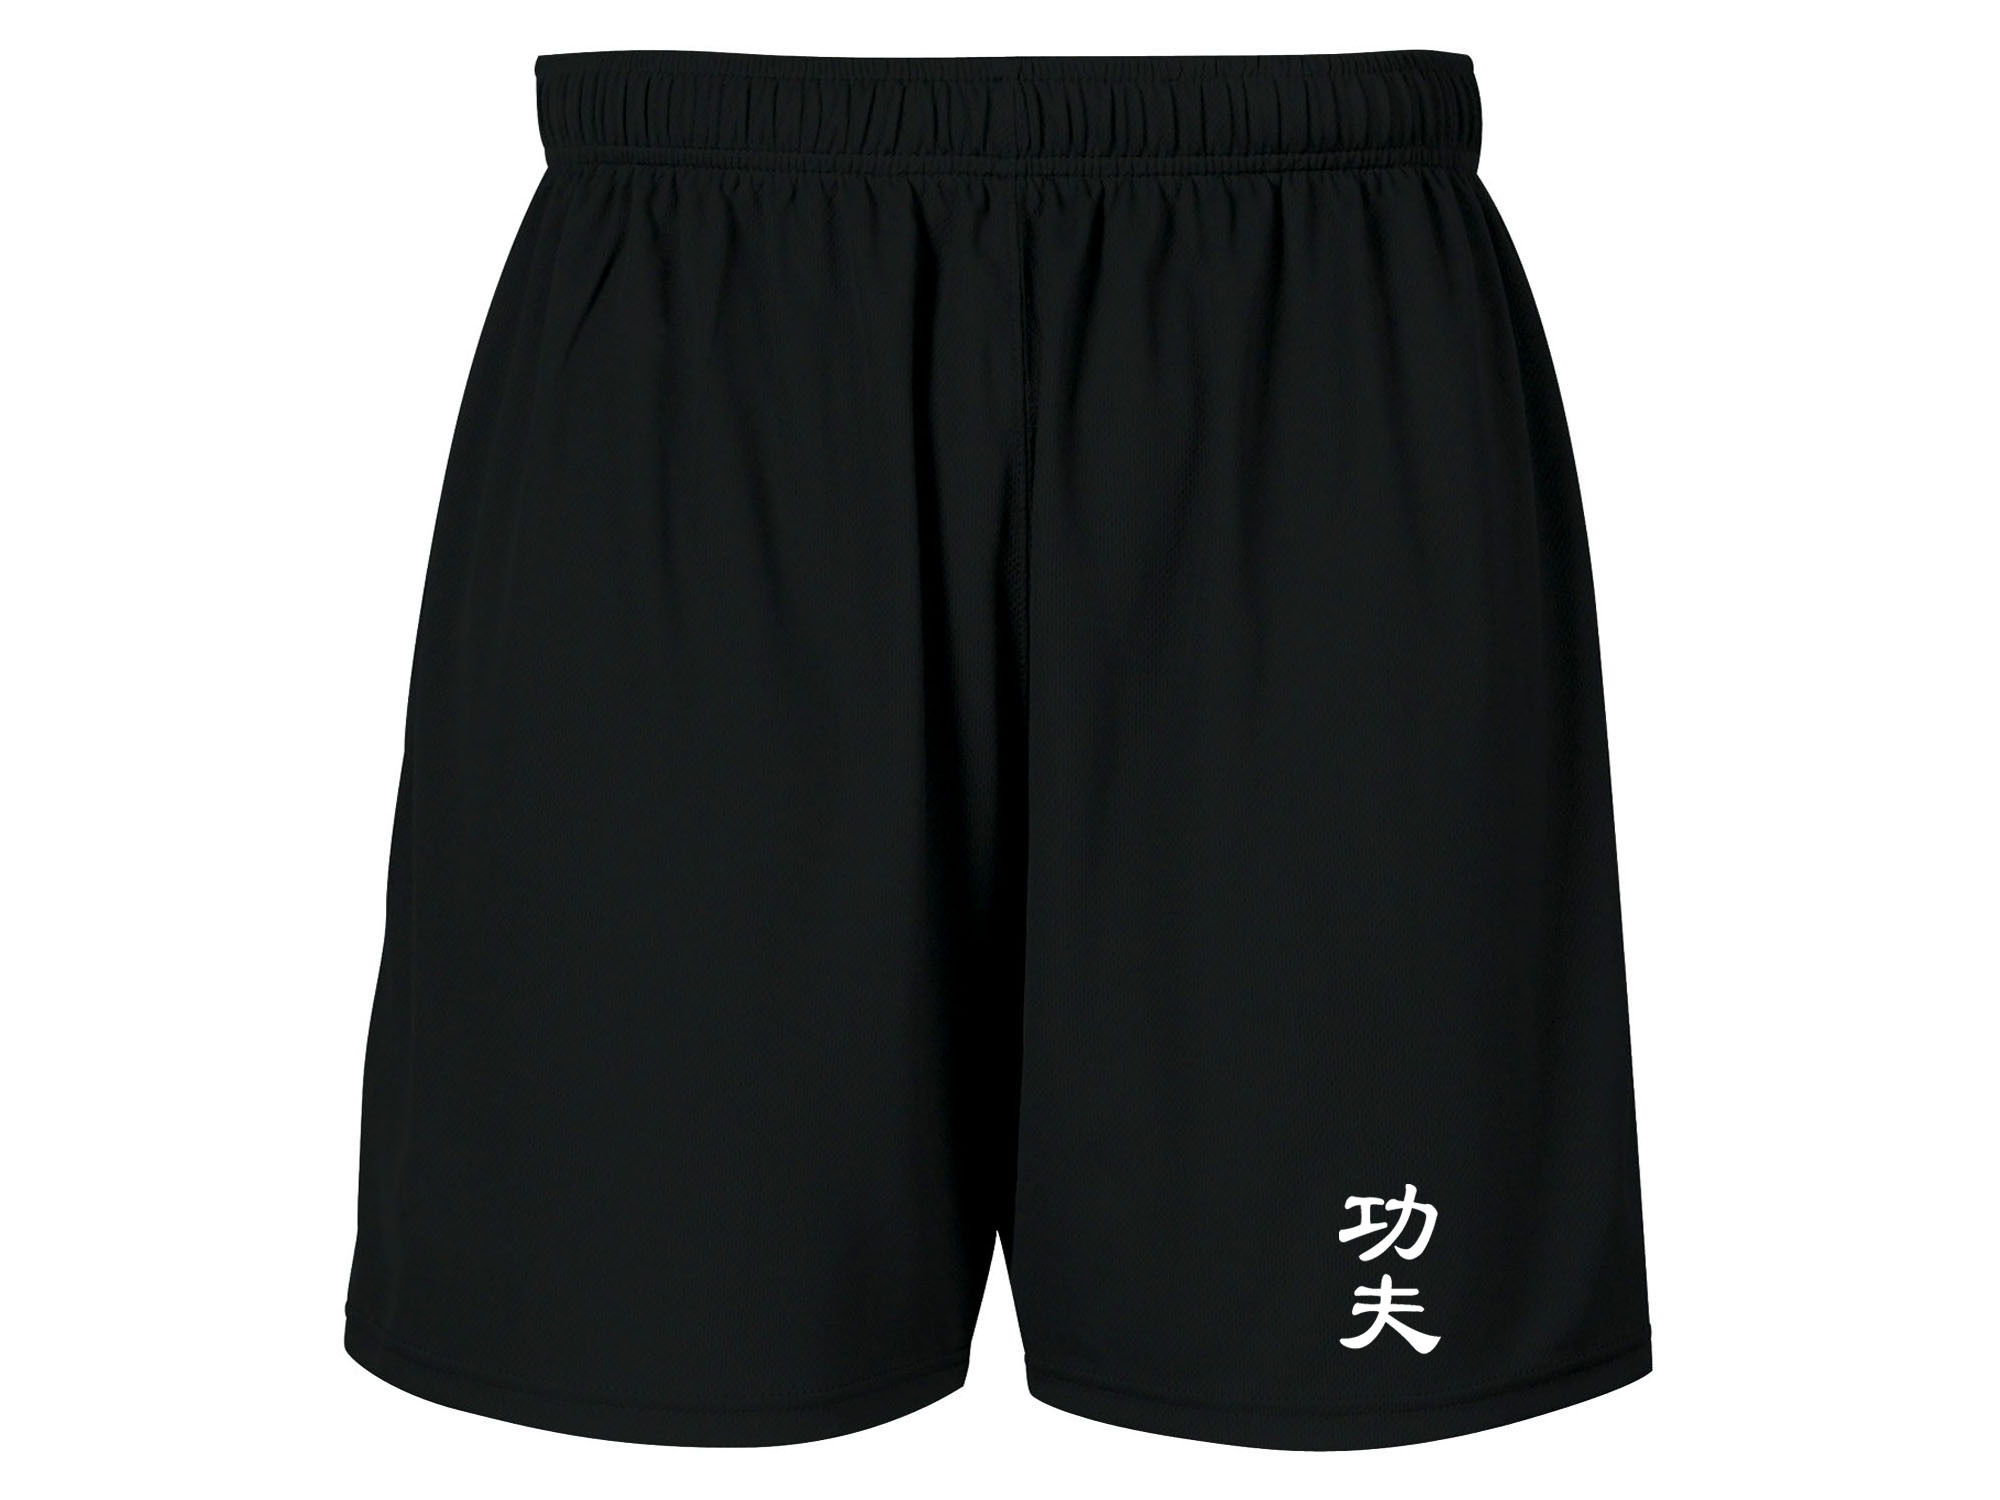 Kung fu Kanji writing moisture wicking fabric black workout shorts